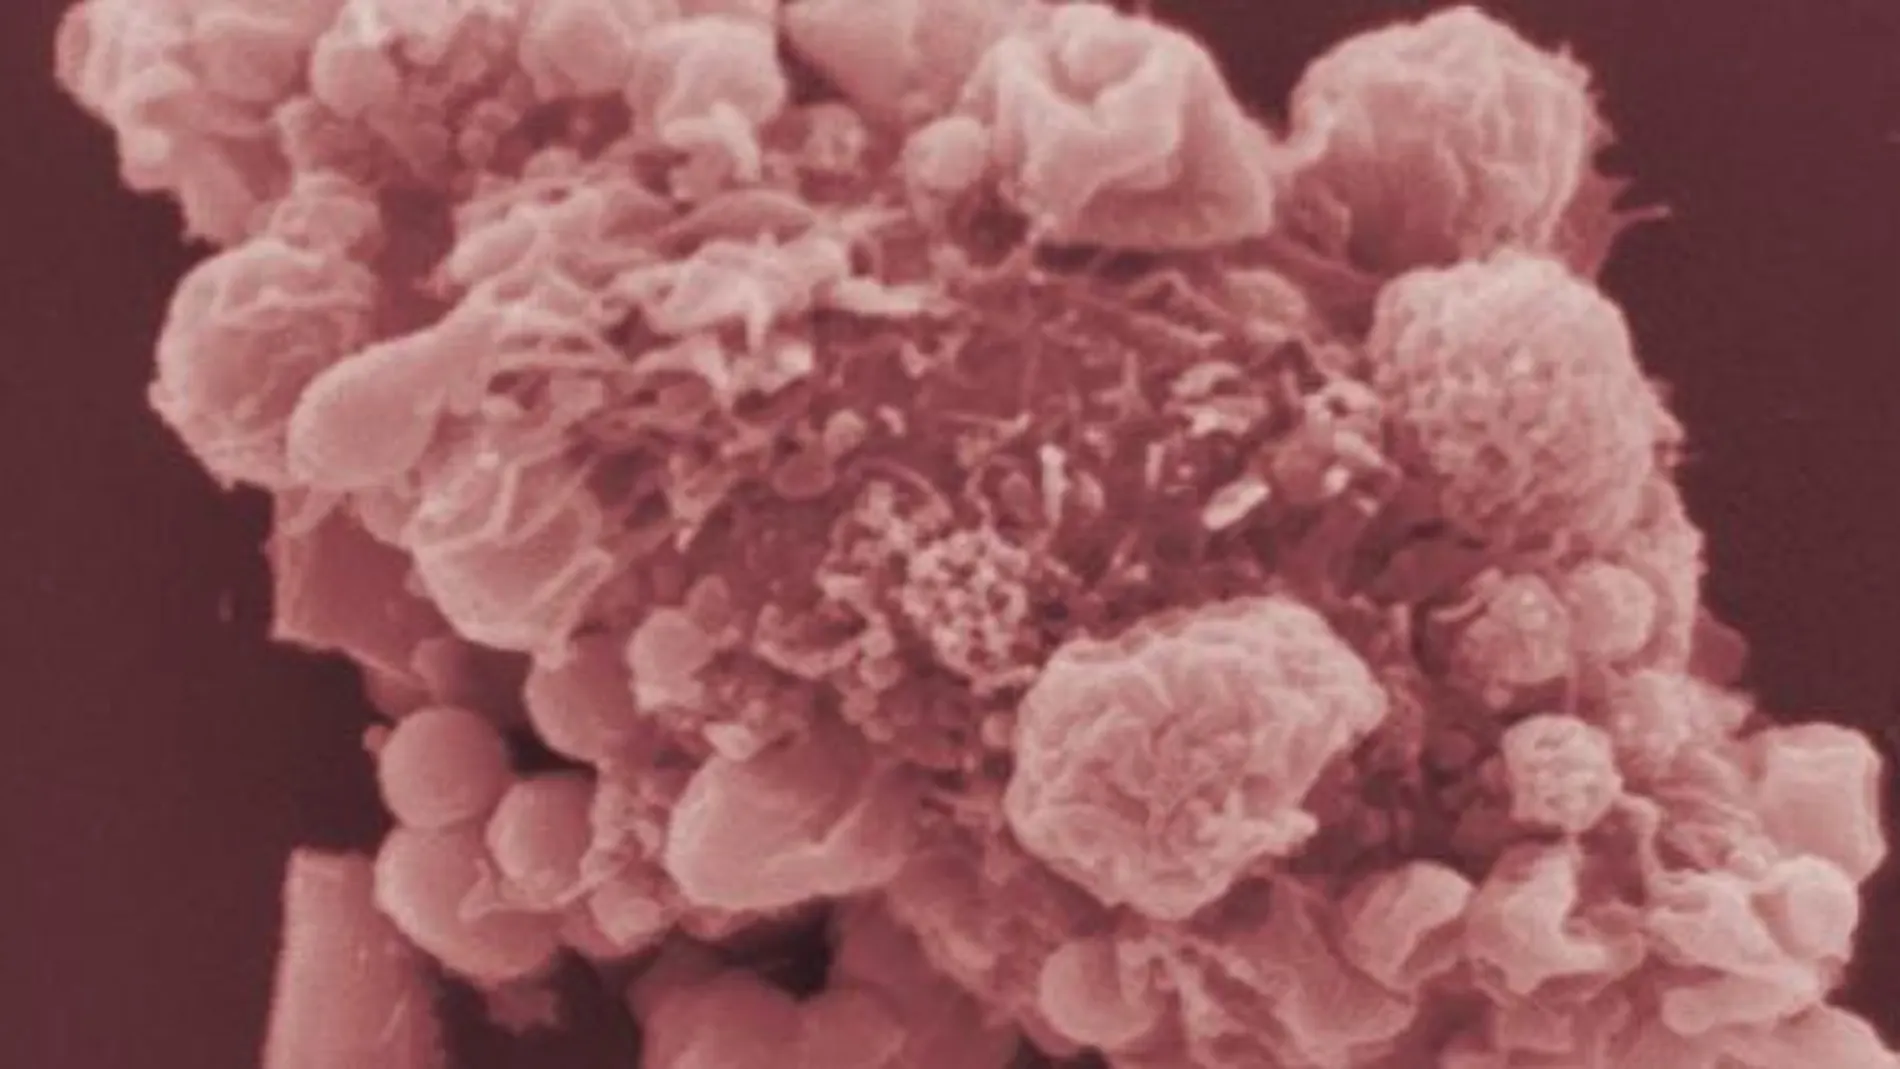 Composición de imágenes microscópicas de células cancerígenas.